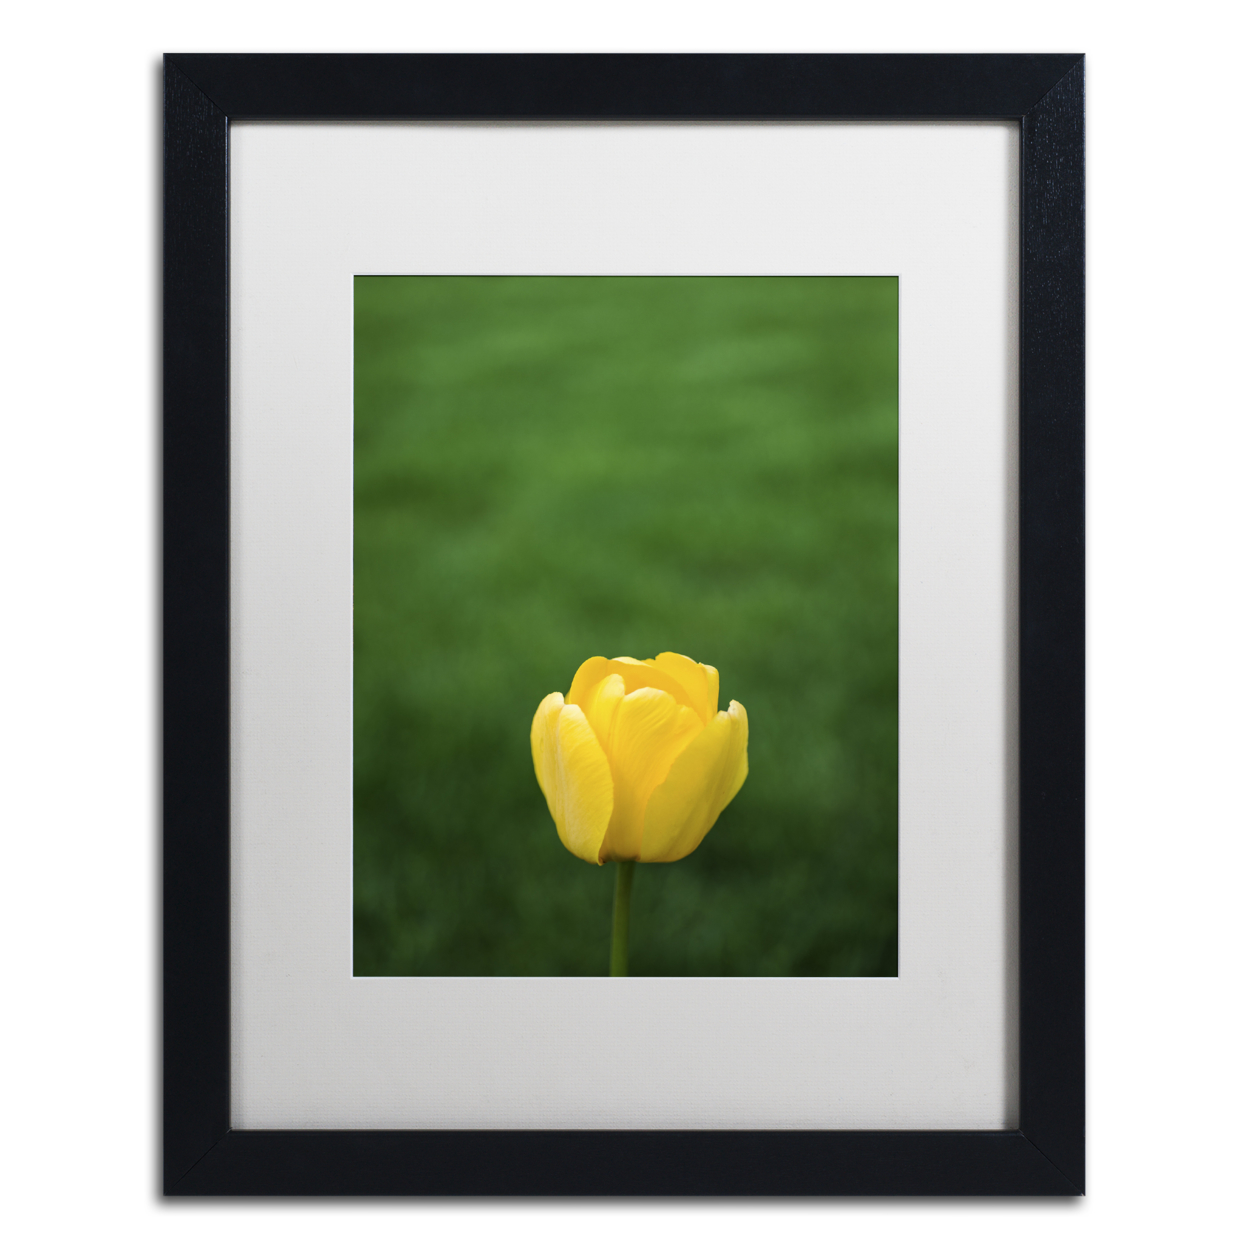 Kurt Shaffer 'A Lone Yellow Tulip' Black Wooden Framed Art 18 X 22 Inches